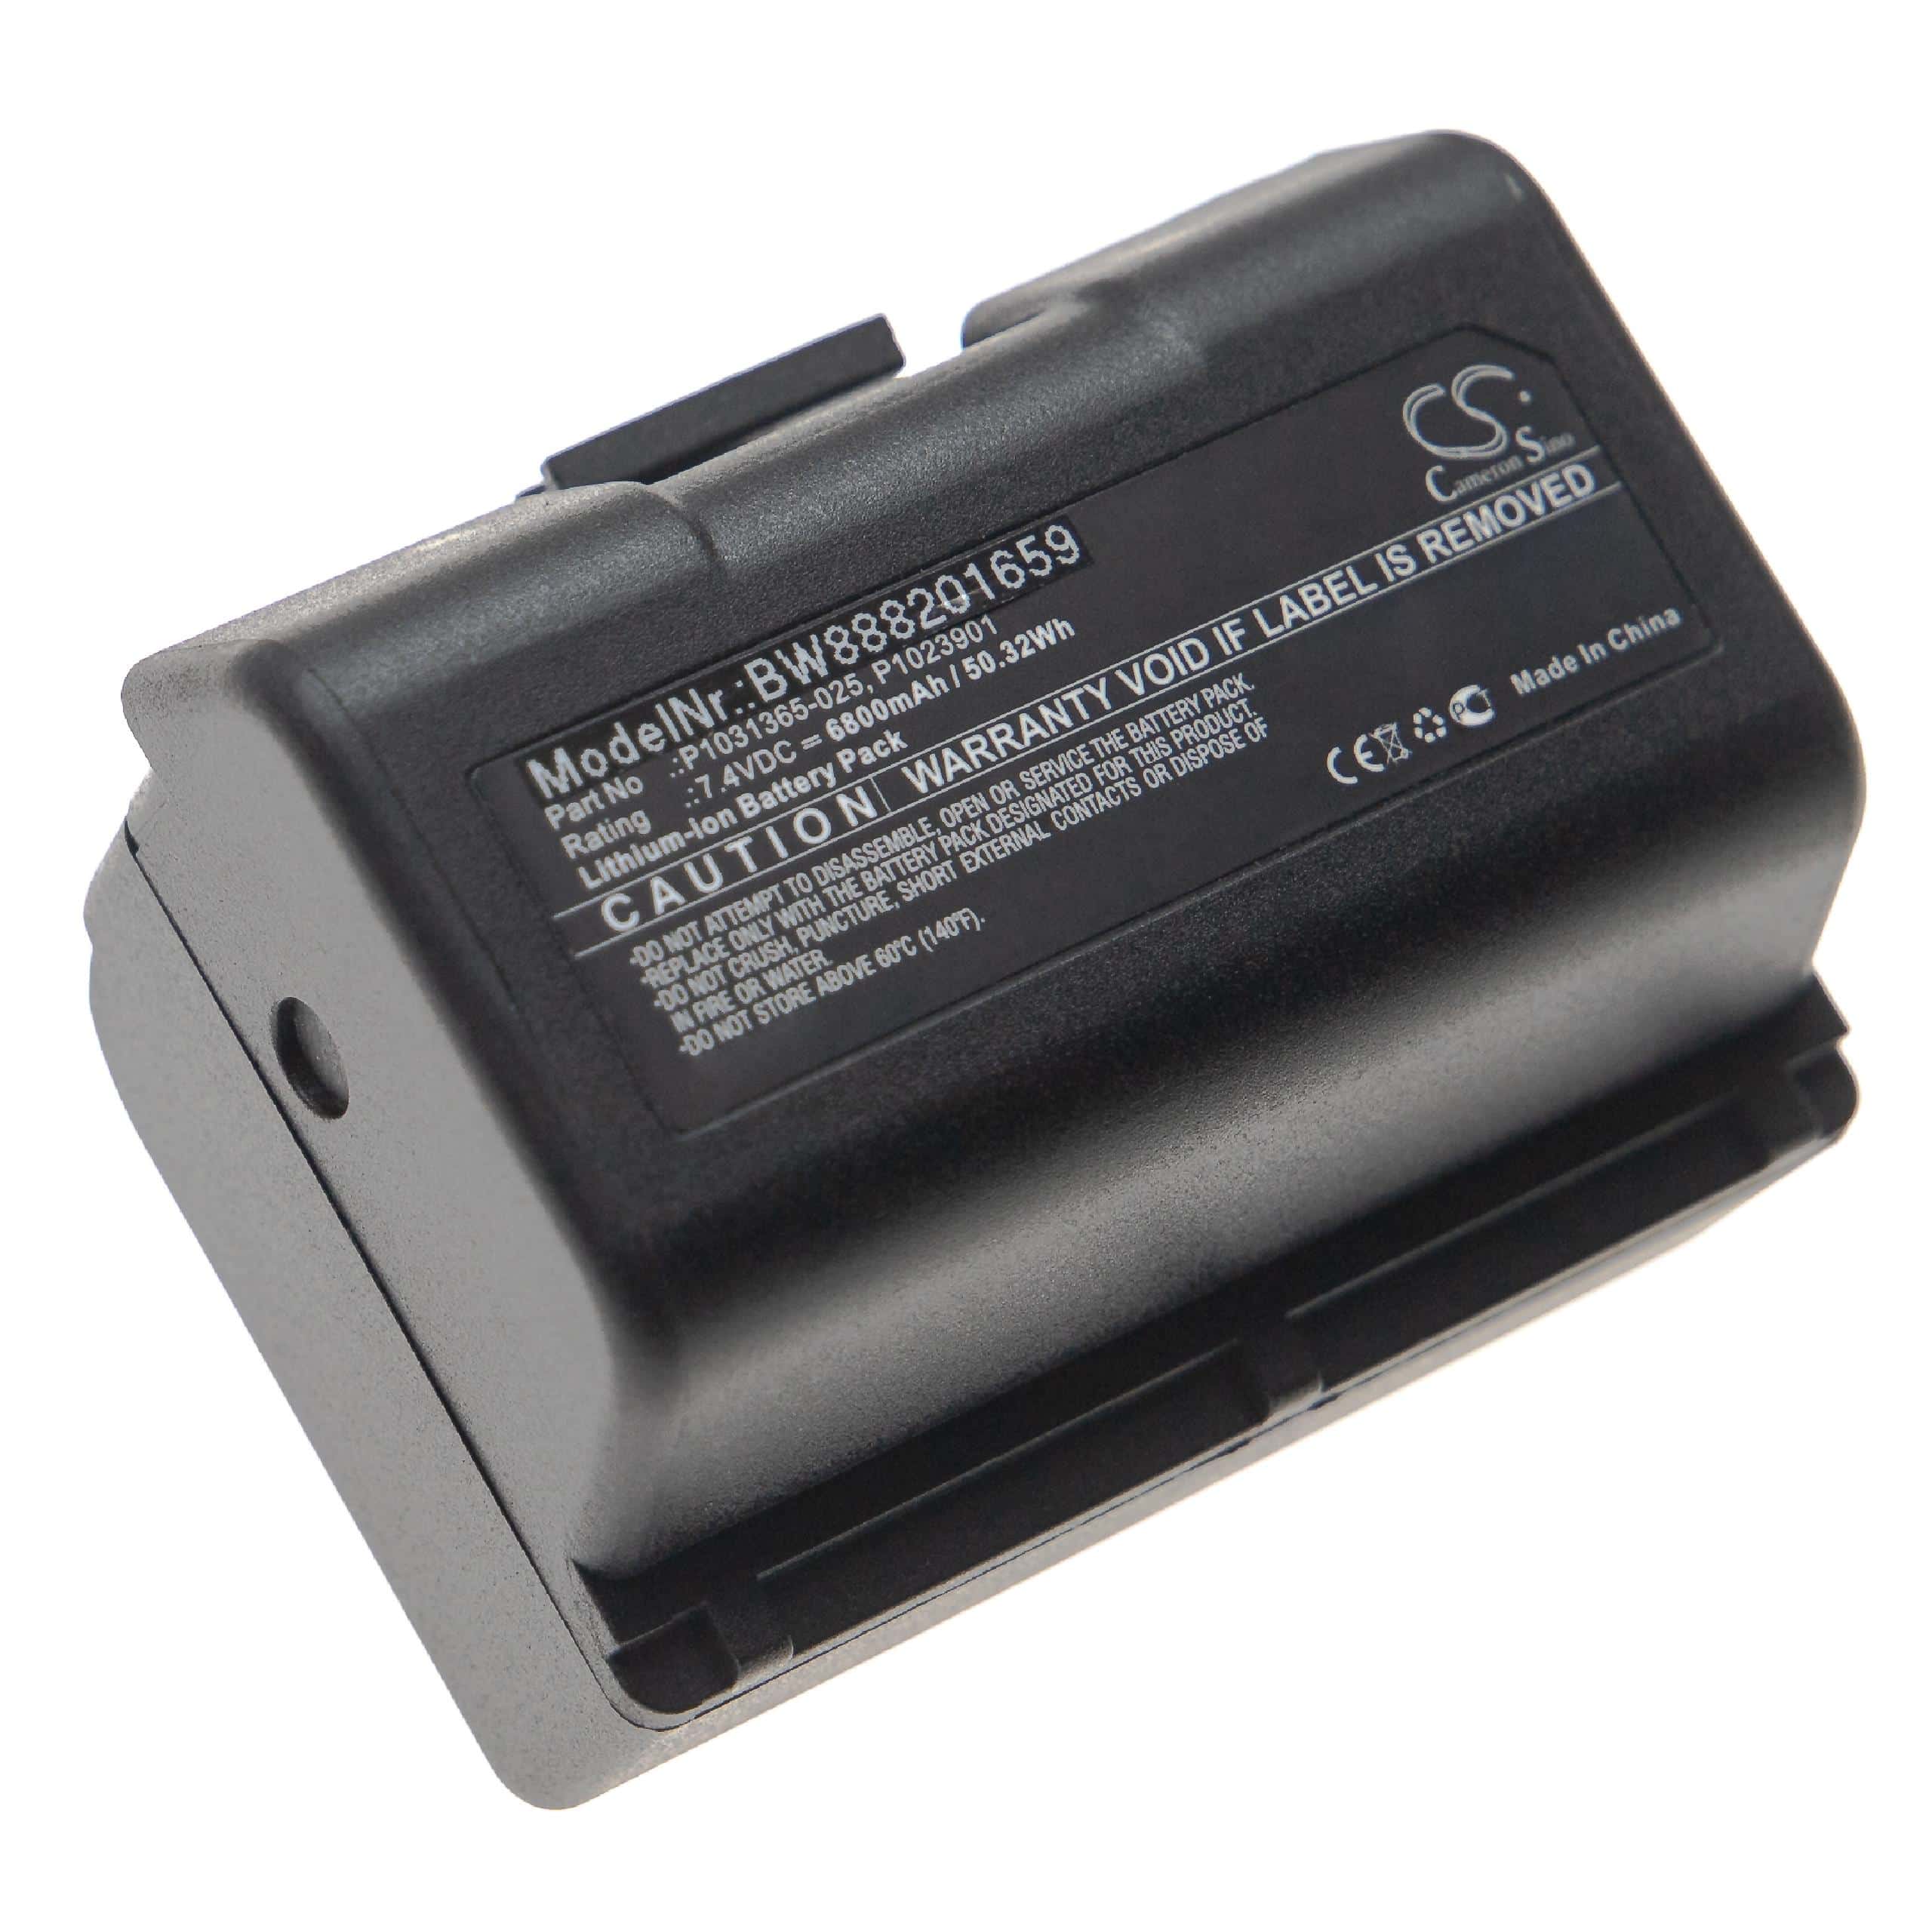 Batterie remplace Zebra AT16004, BTRY-MPP-34MA1-01, BTRY-MPP-34MAHC1-01 pour imprimante - 6800mAh 7,4V Li-ion